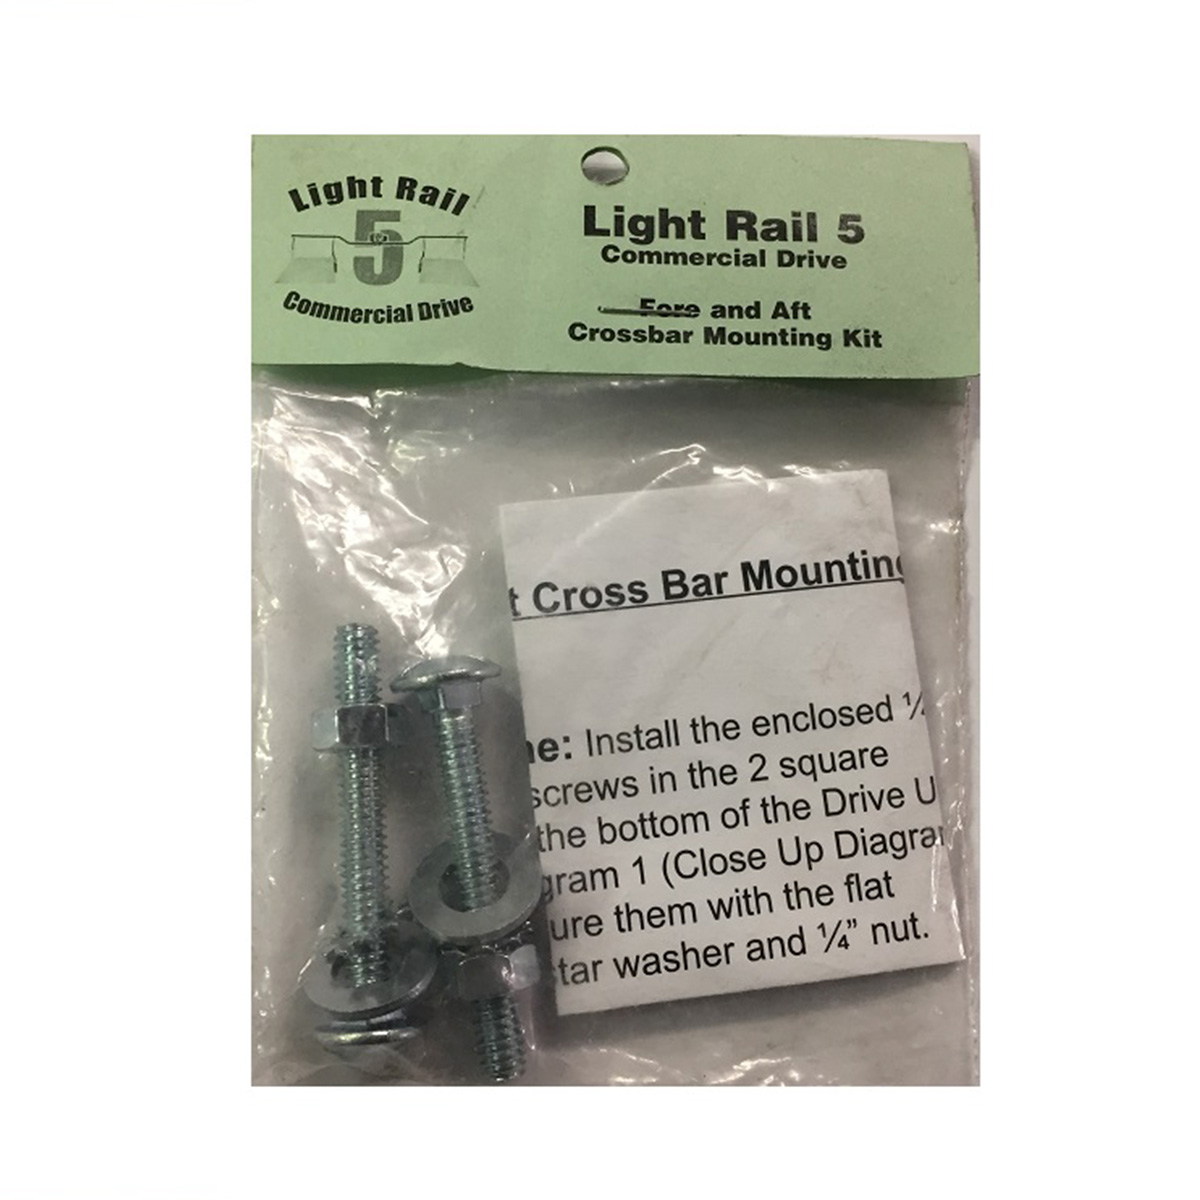 Light Rail 5.0 Crossbar Mounting Kit